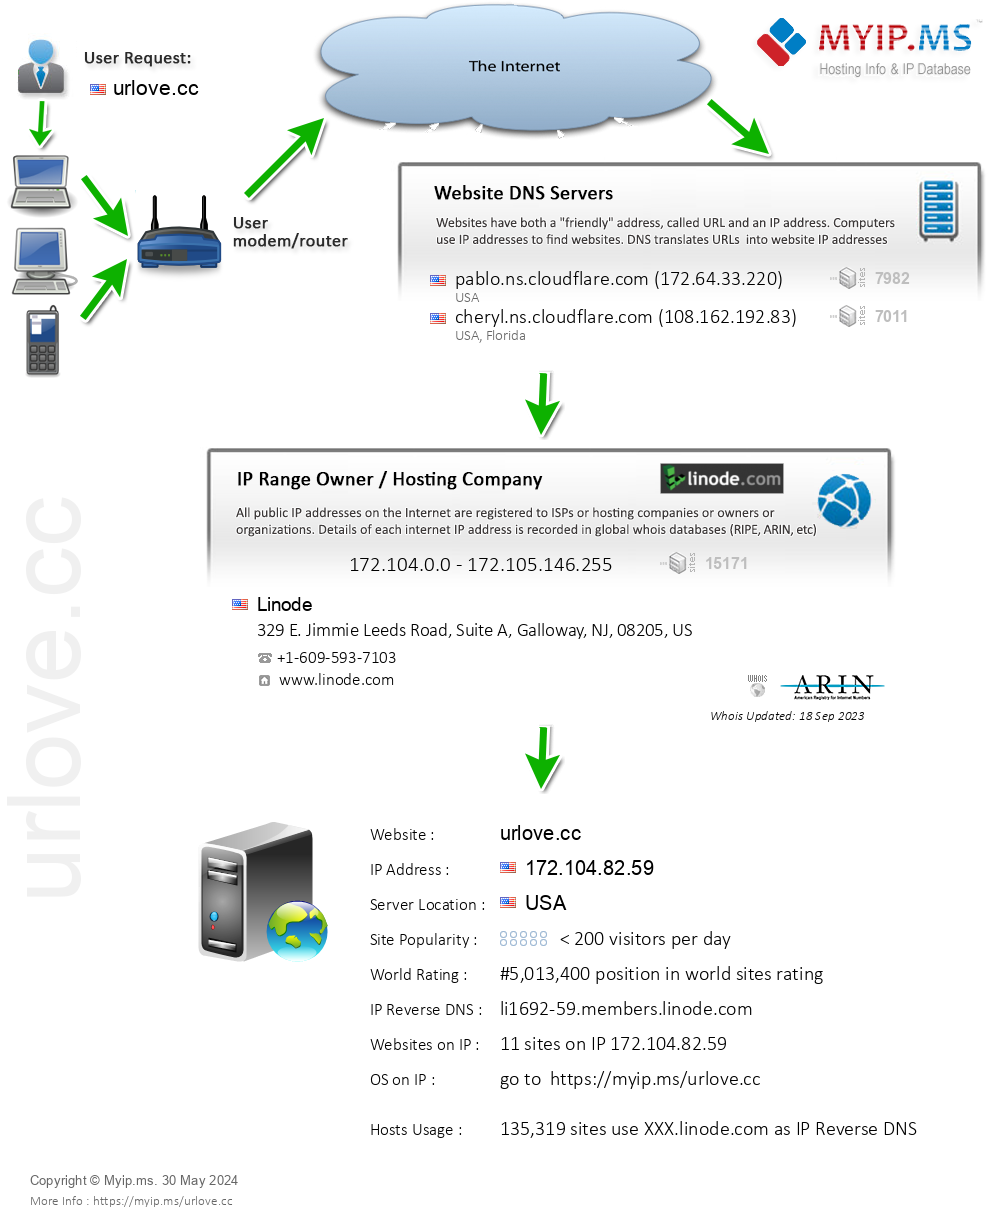 Urlove.cc - Website Hosting Visual IP Diagram